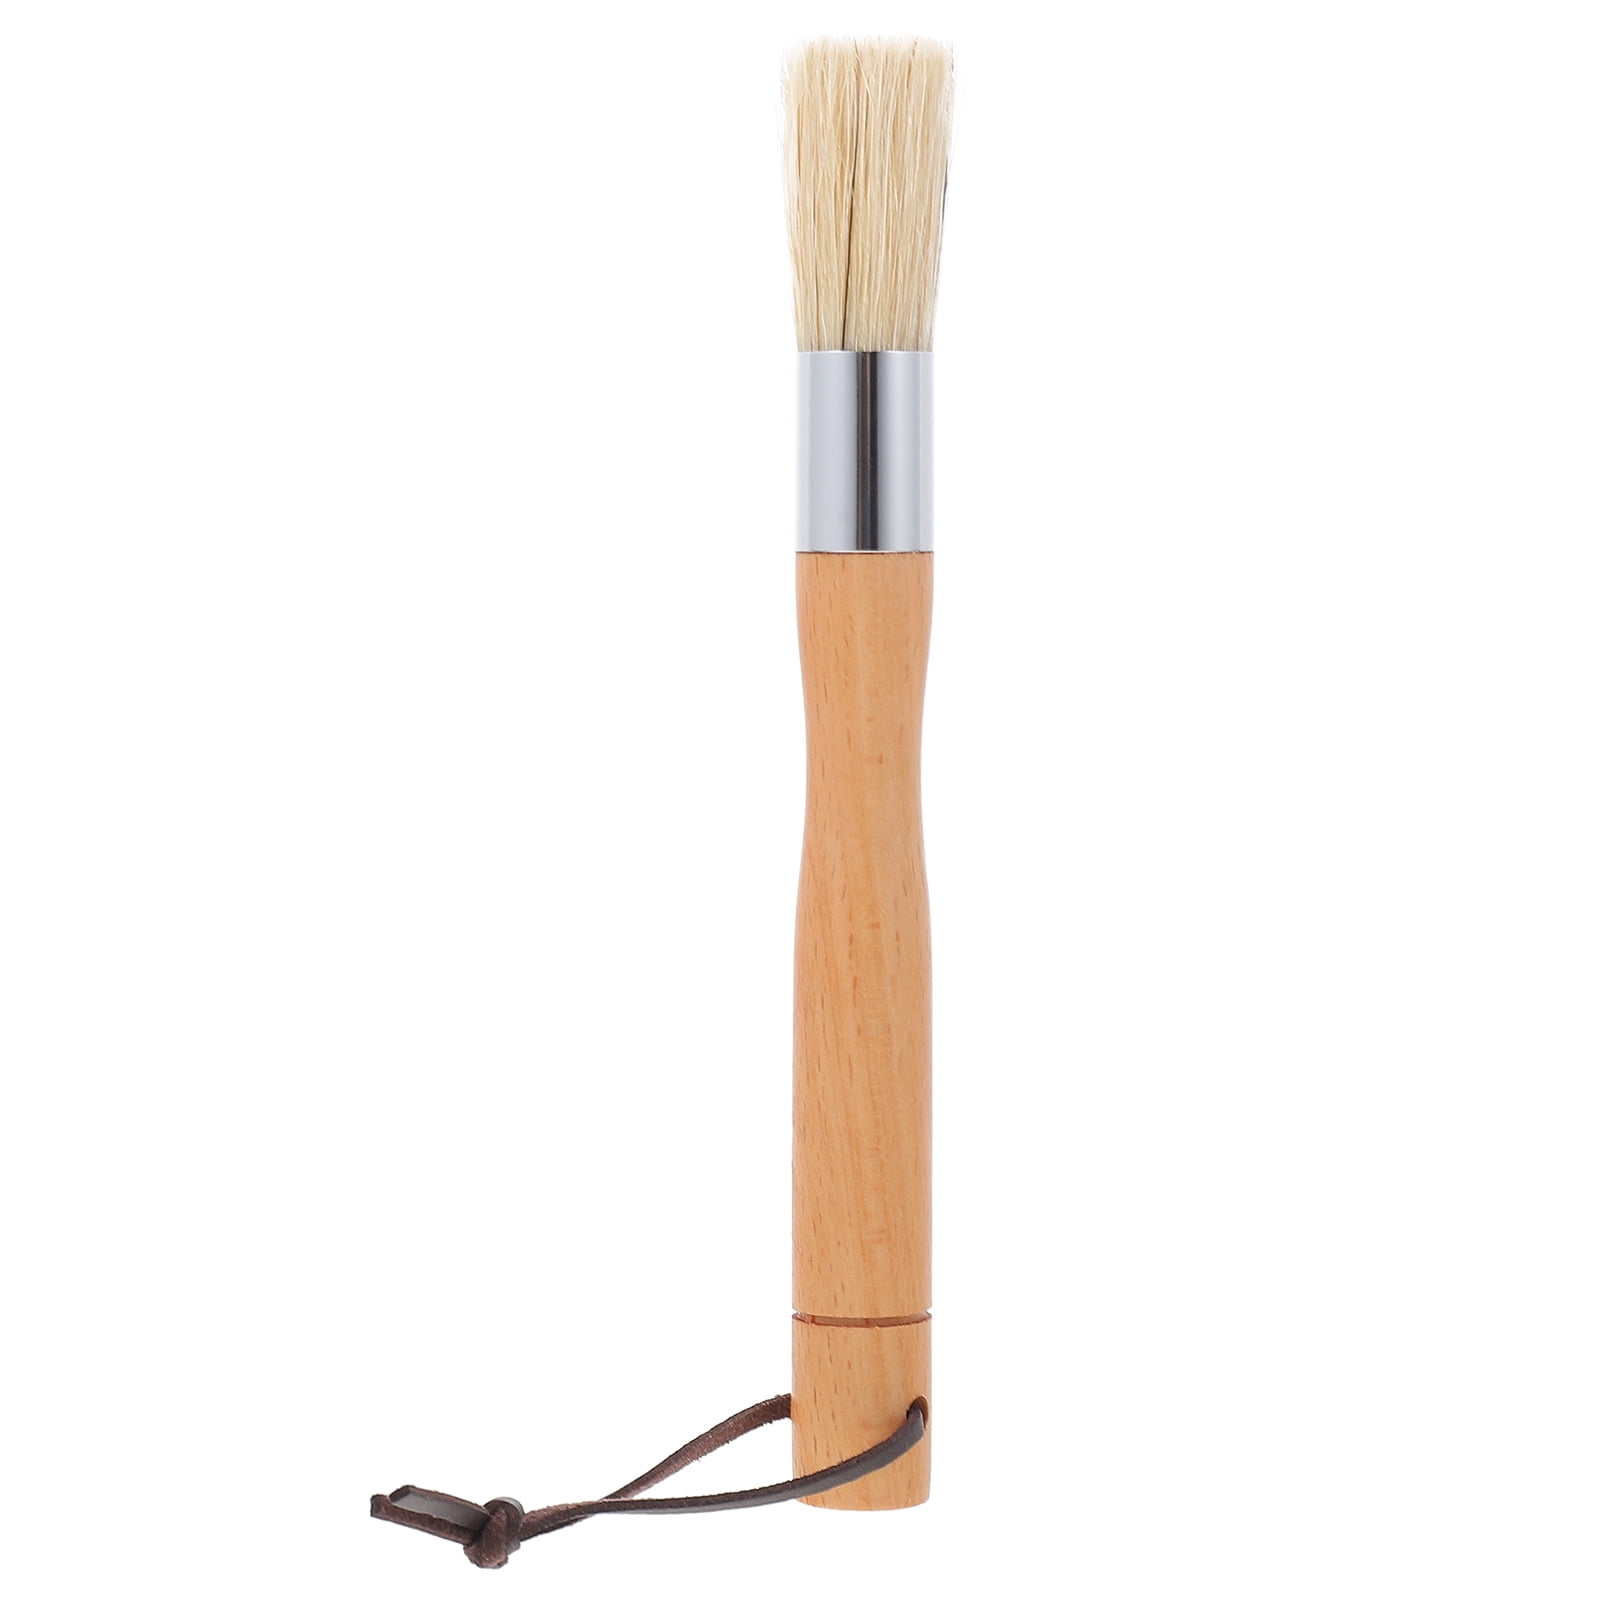 Bretani Coffee Grinder Cleaning Brush - Espresso Maker/Machine Cleaner Tool  - Wood Handle, Natural Bristles